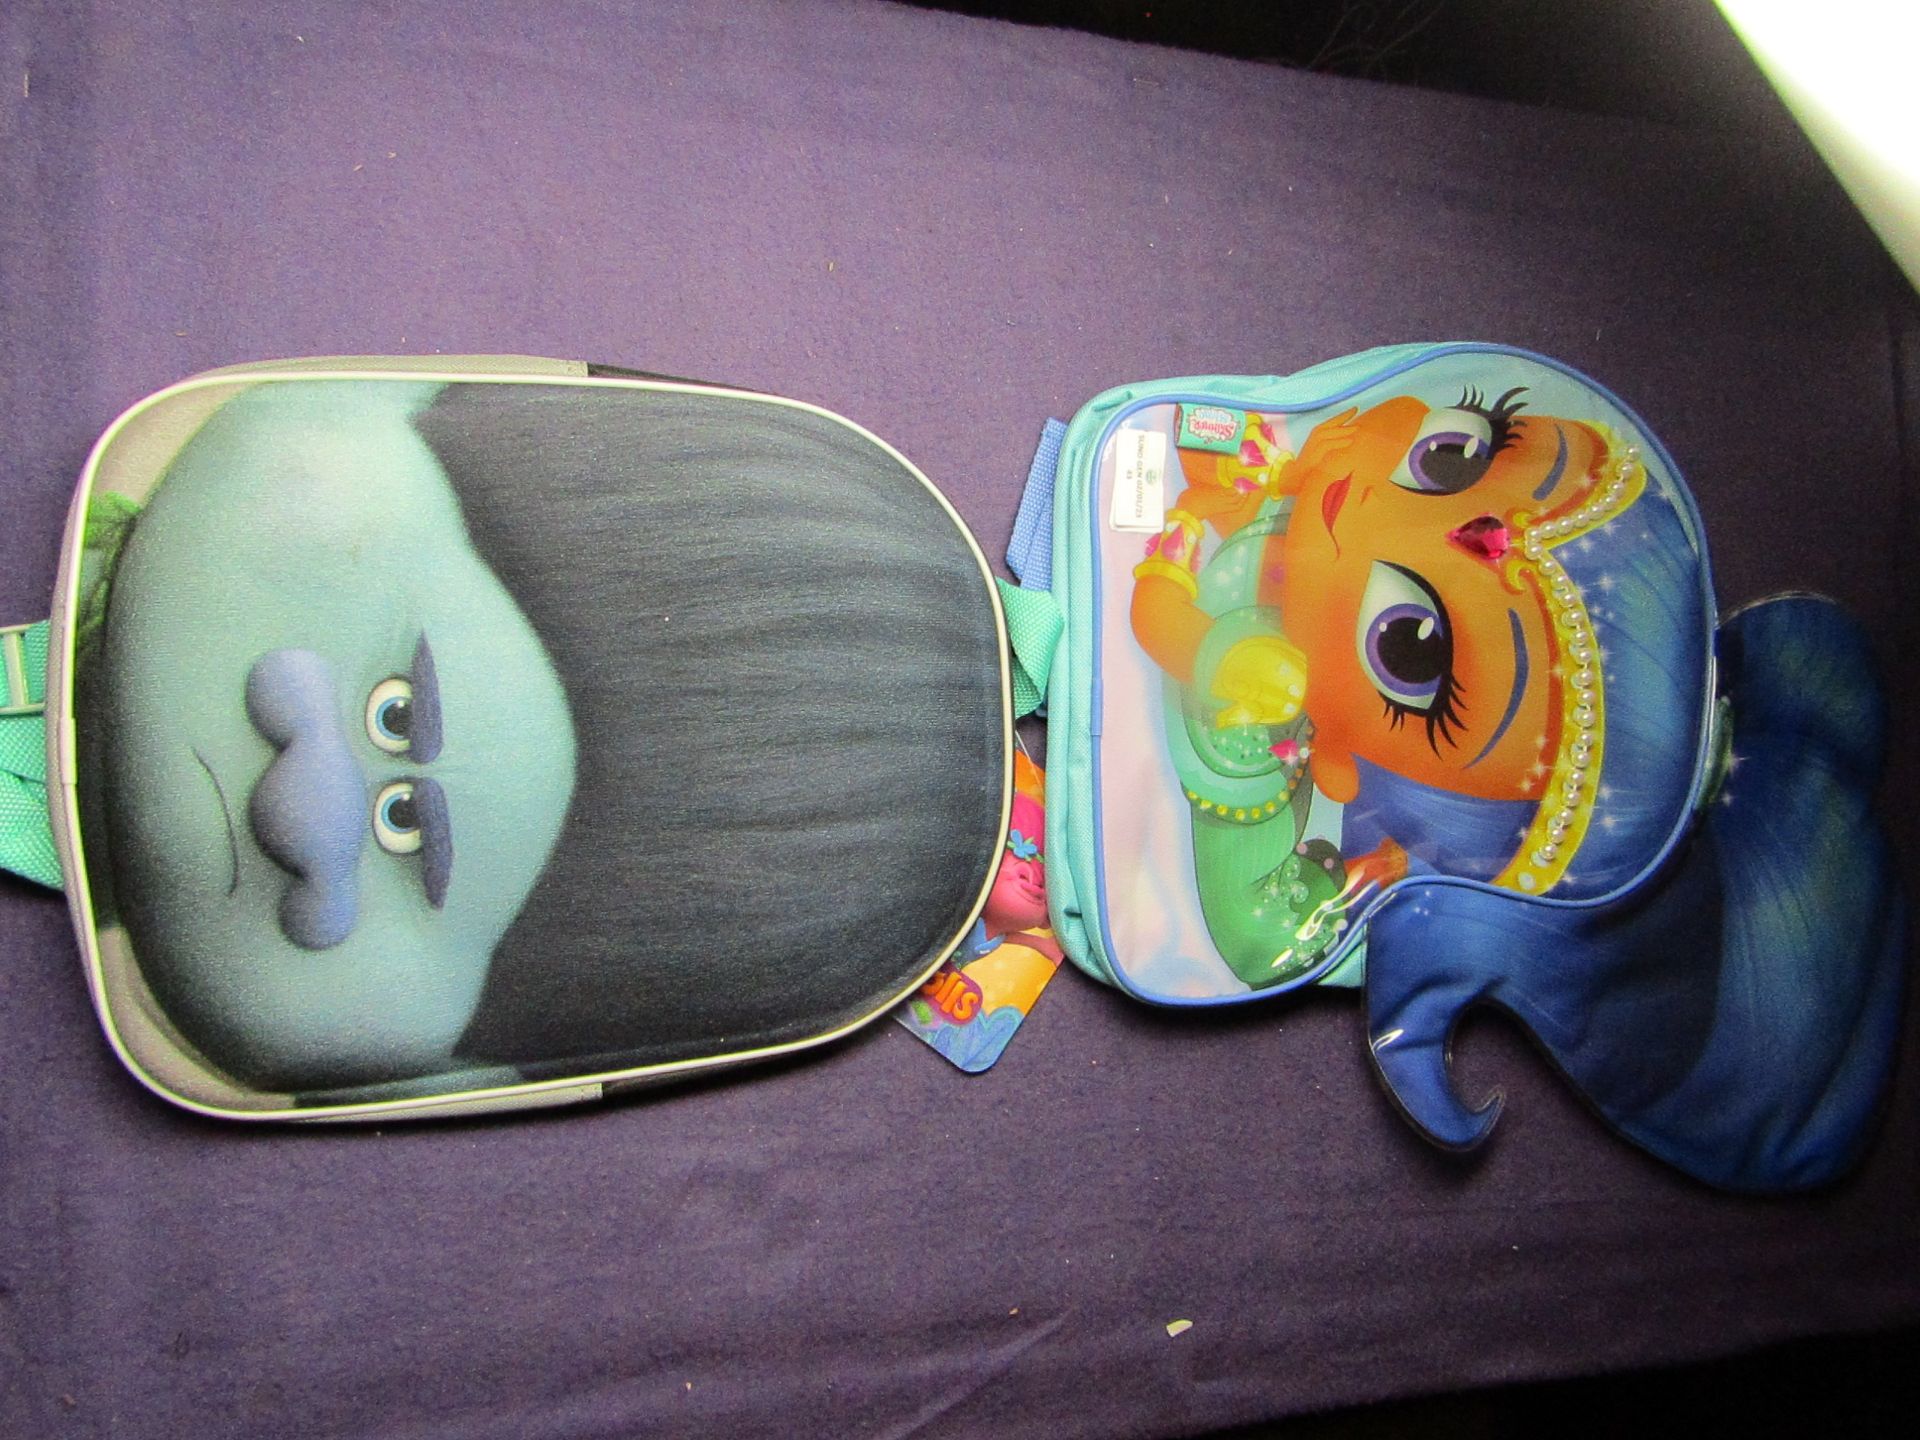 1x Shimmer & Sparkle - 3D Backpack - Unused & Packaged. 1x Trolls - 3D Backpack - Unused, No